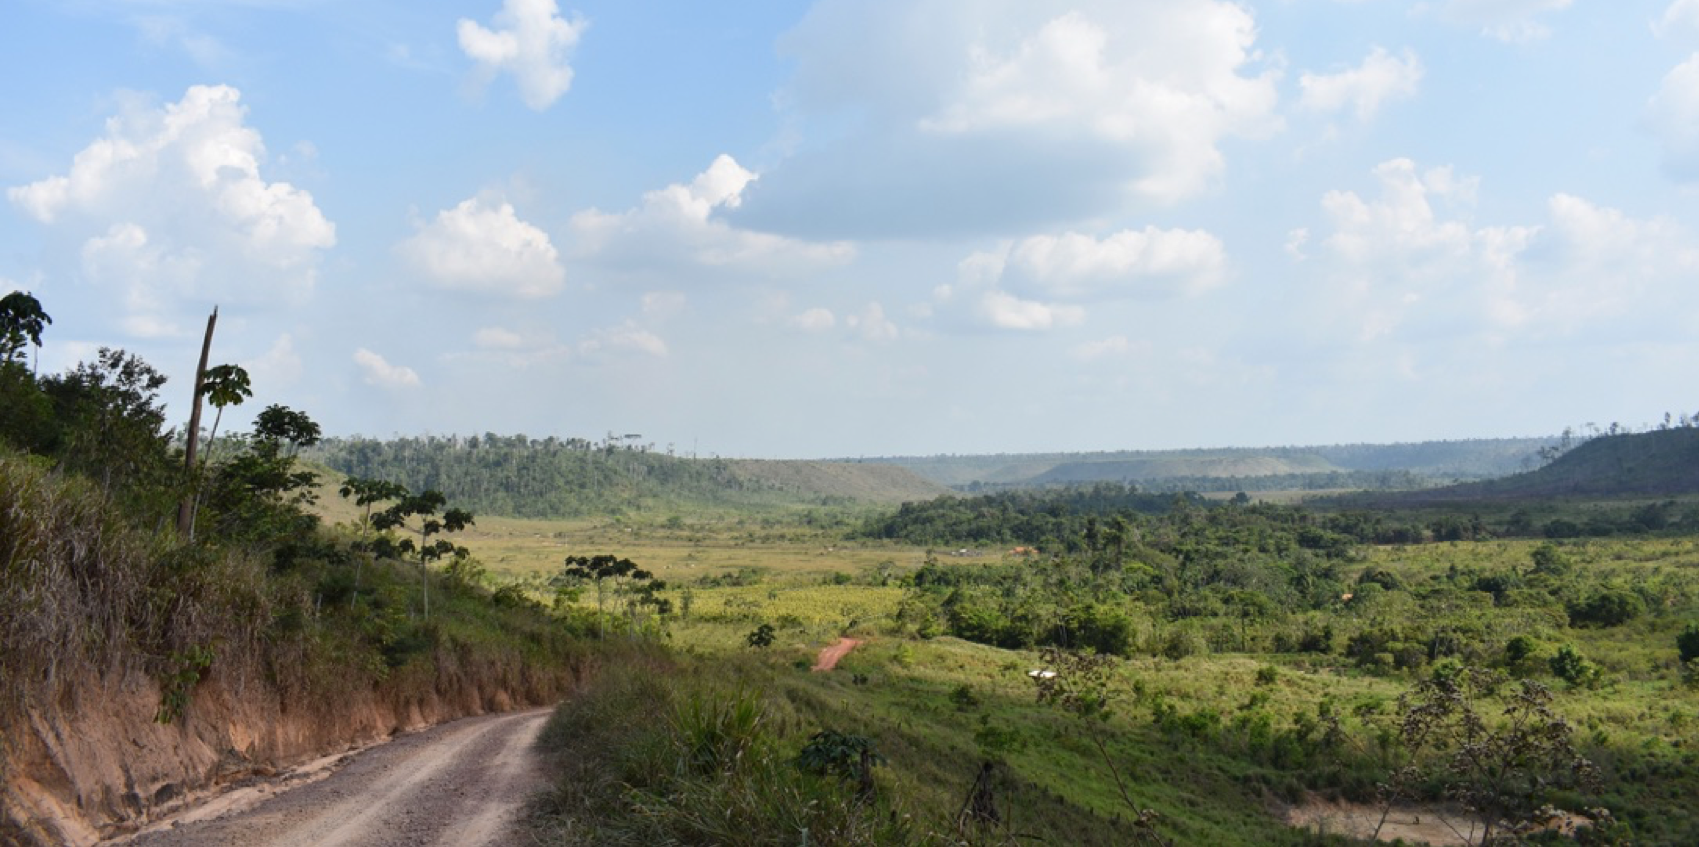 Enlarged view: Amazon landscape